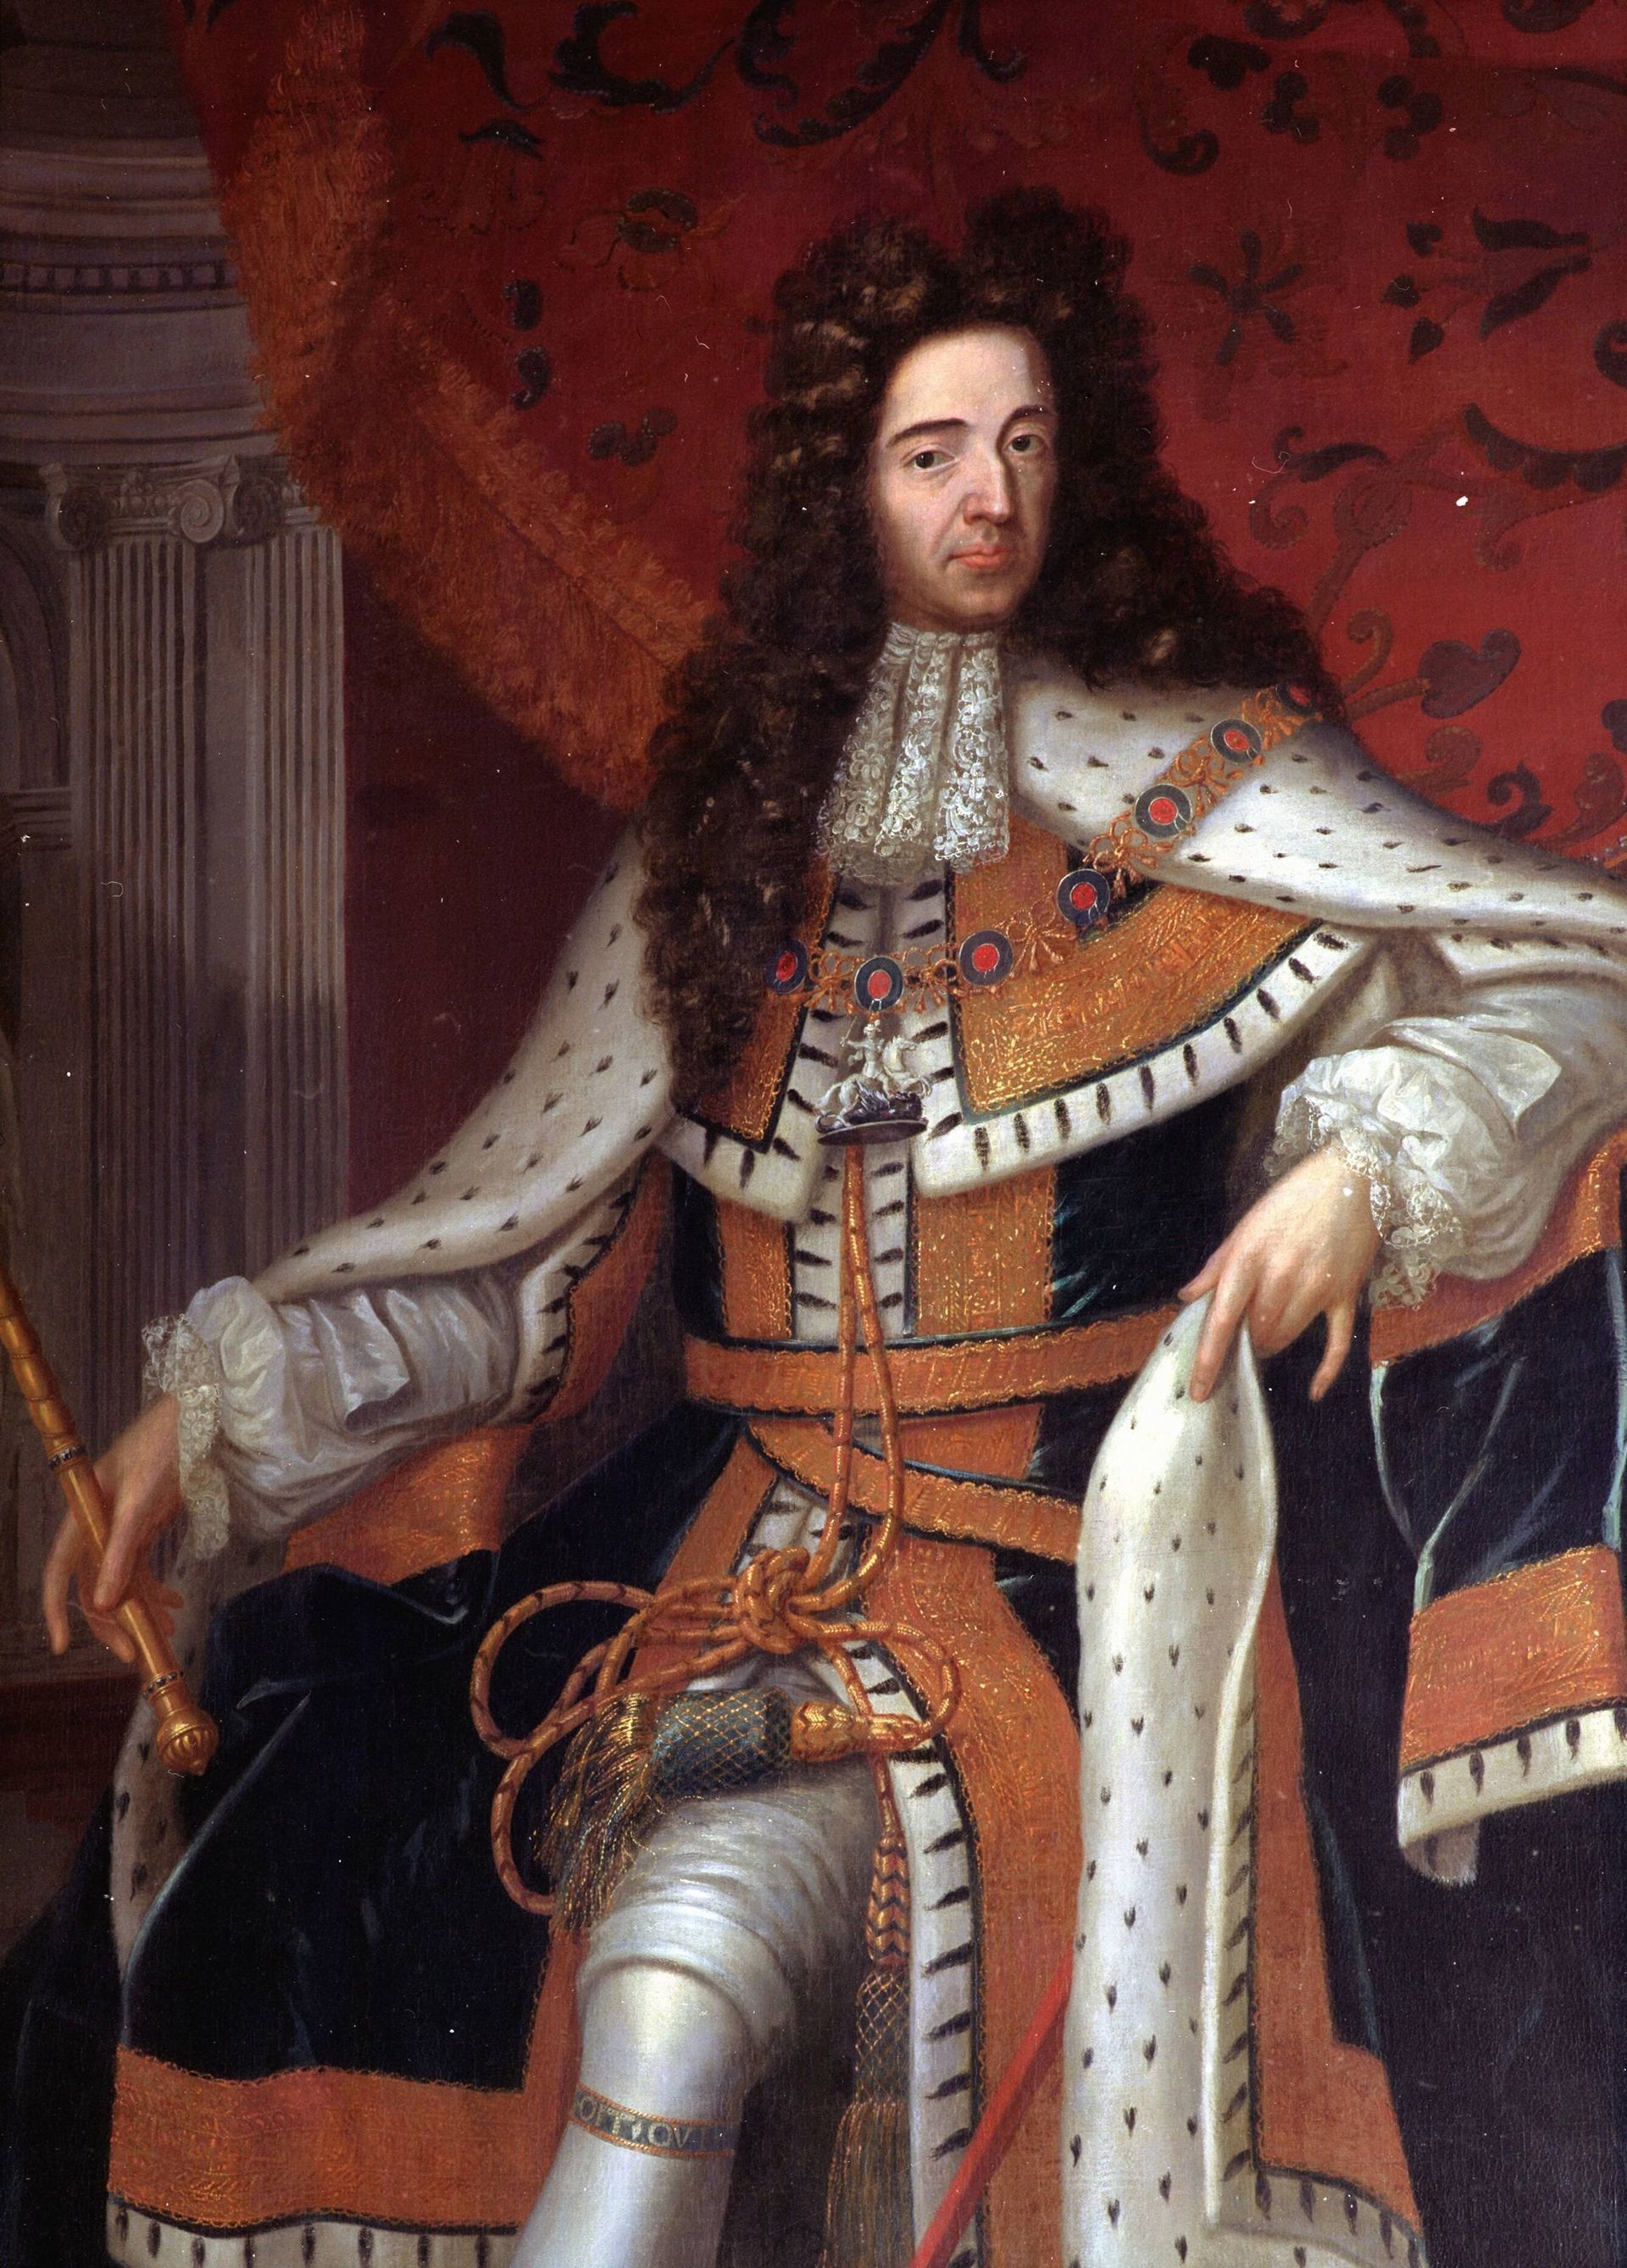 Koning-stadhouder Willem III